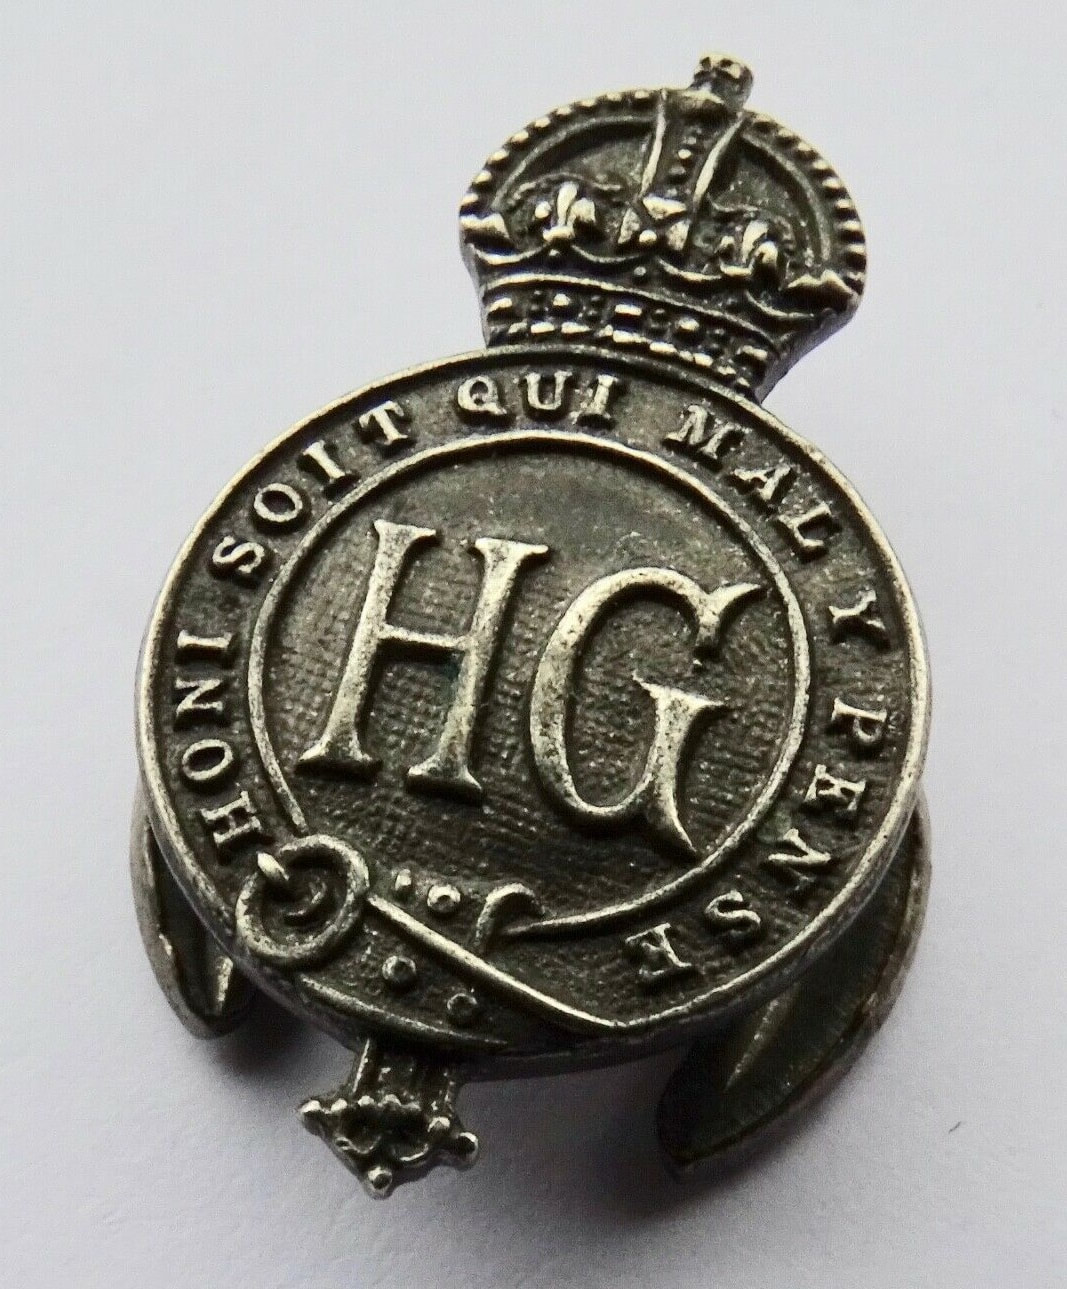 Post-War HG (Home Guard) Lapel Badge - HONI SOIT QUI MAL Y PENSE